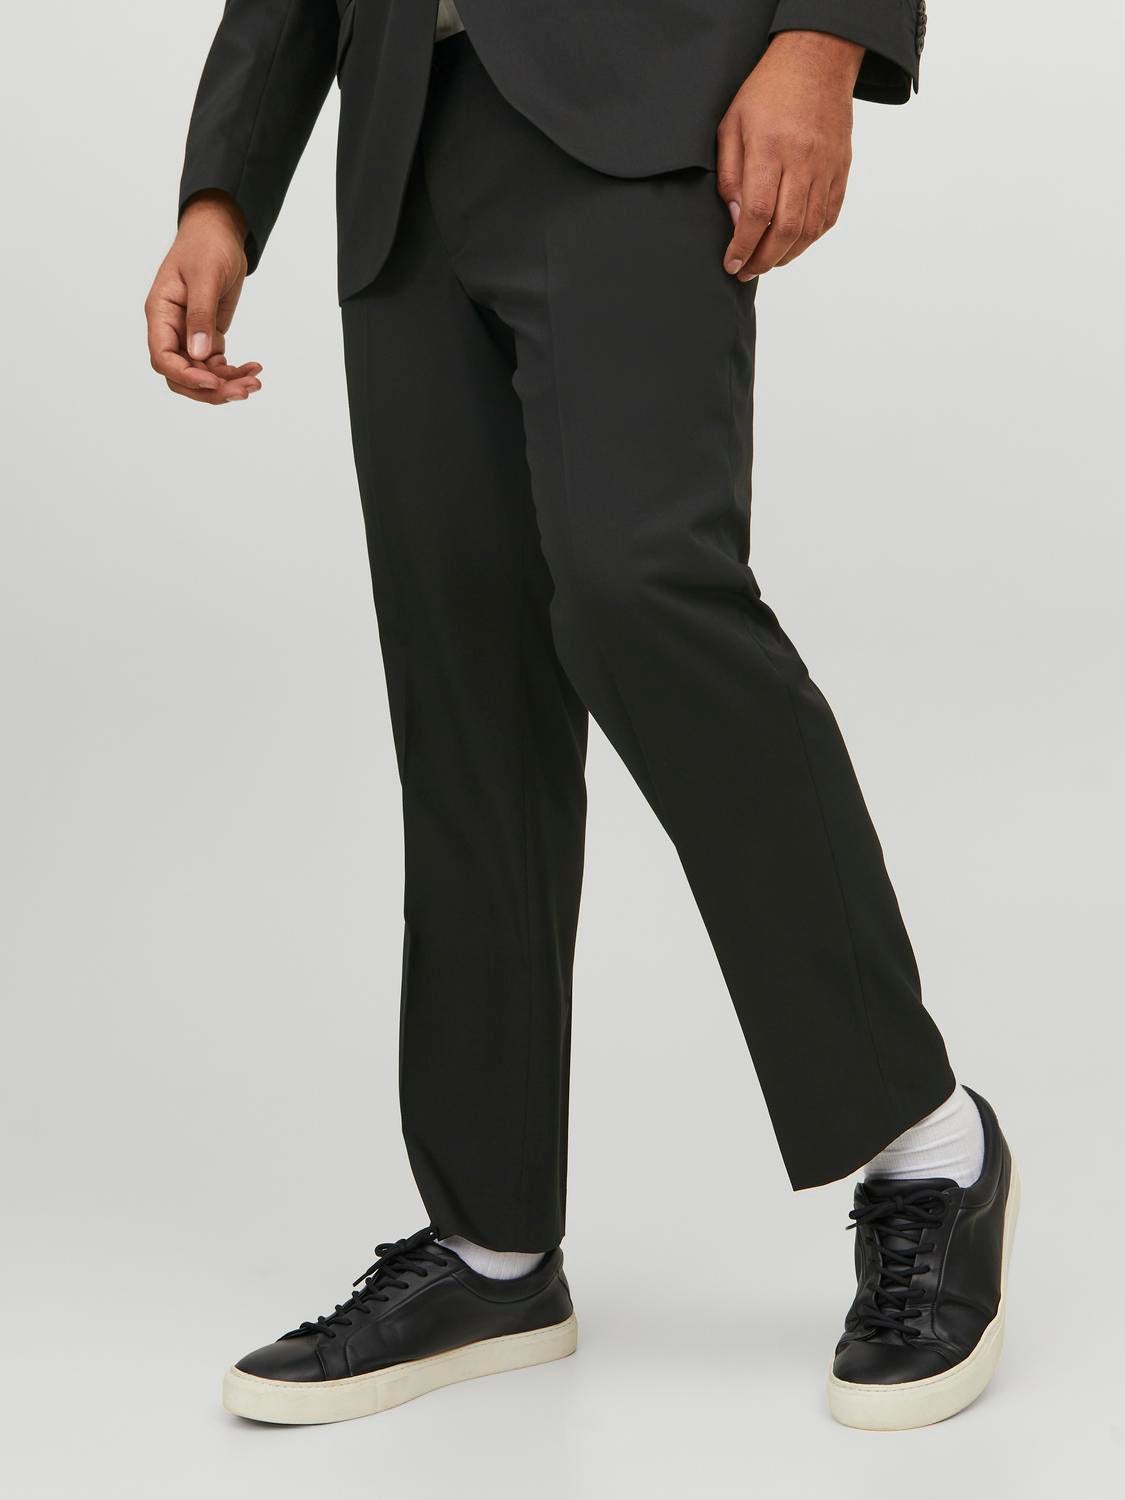 Plus Size Formal Pants Needs Shop Stylish Options For Ladies Amydus